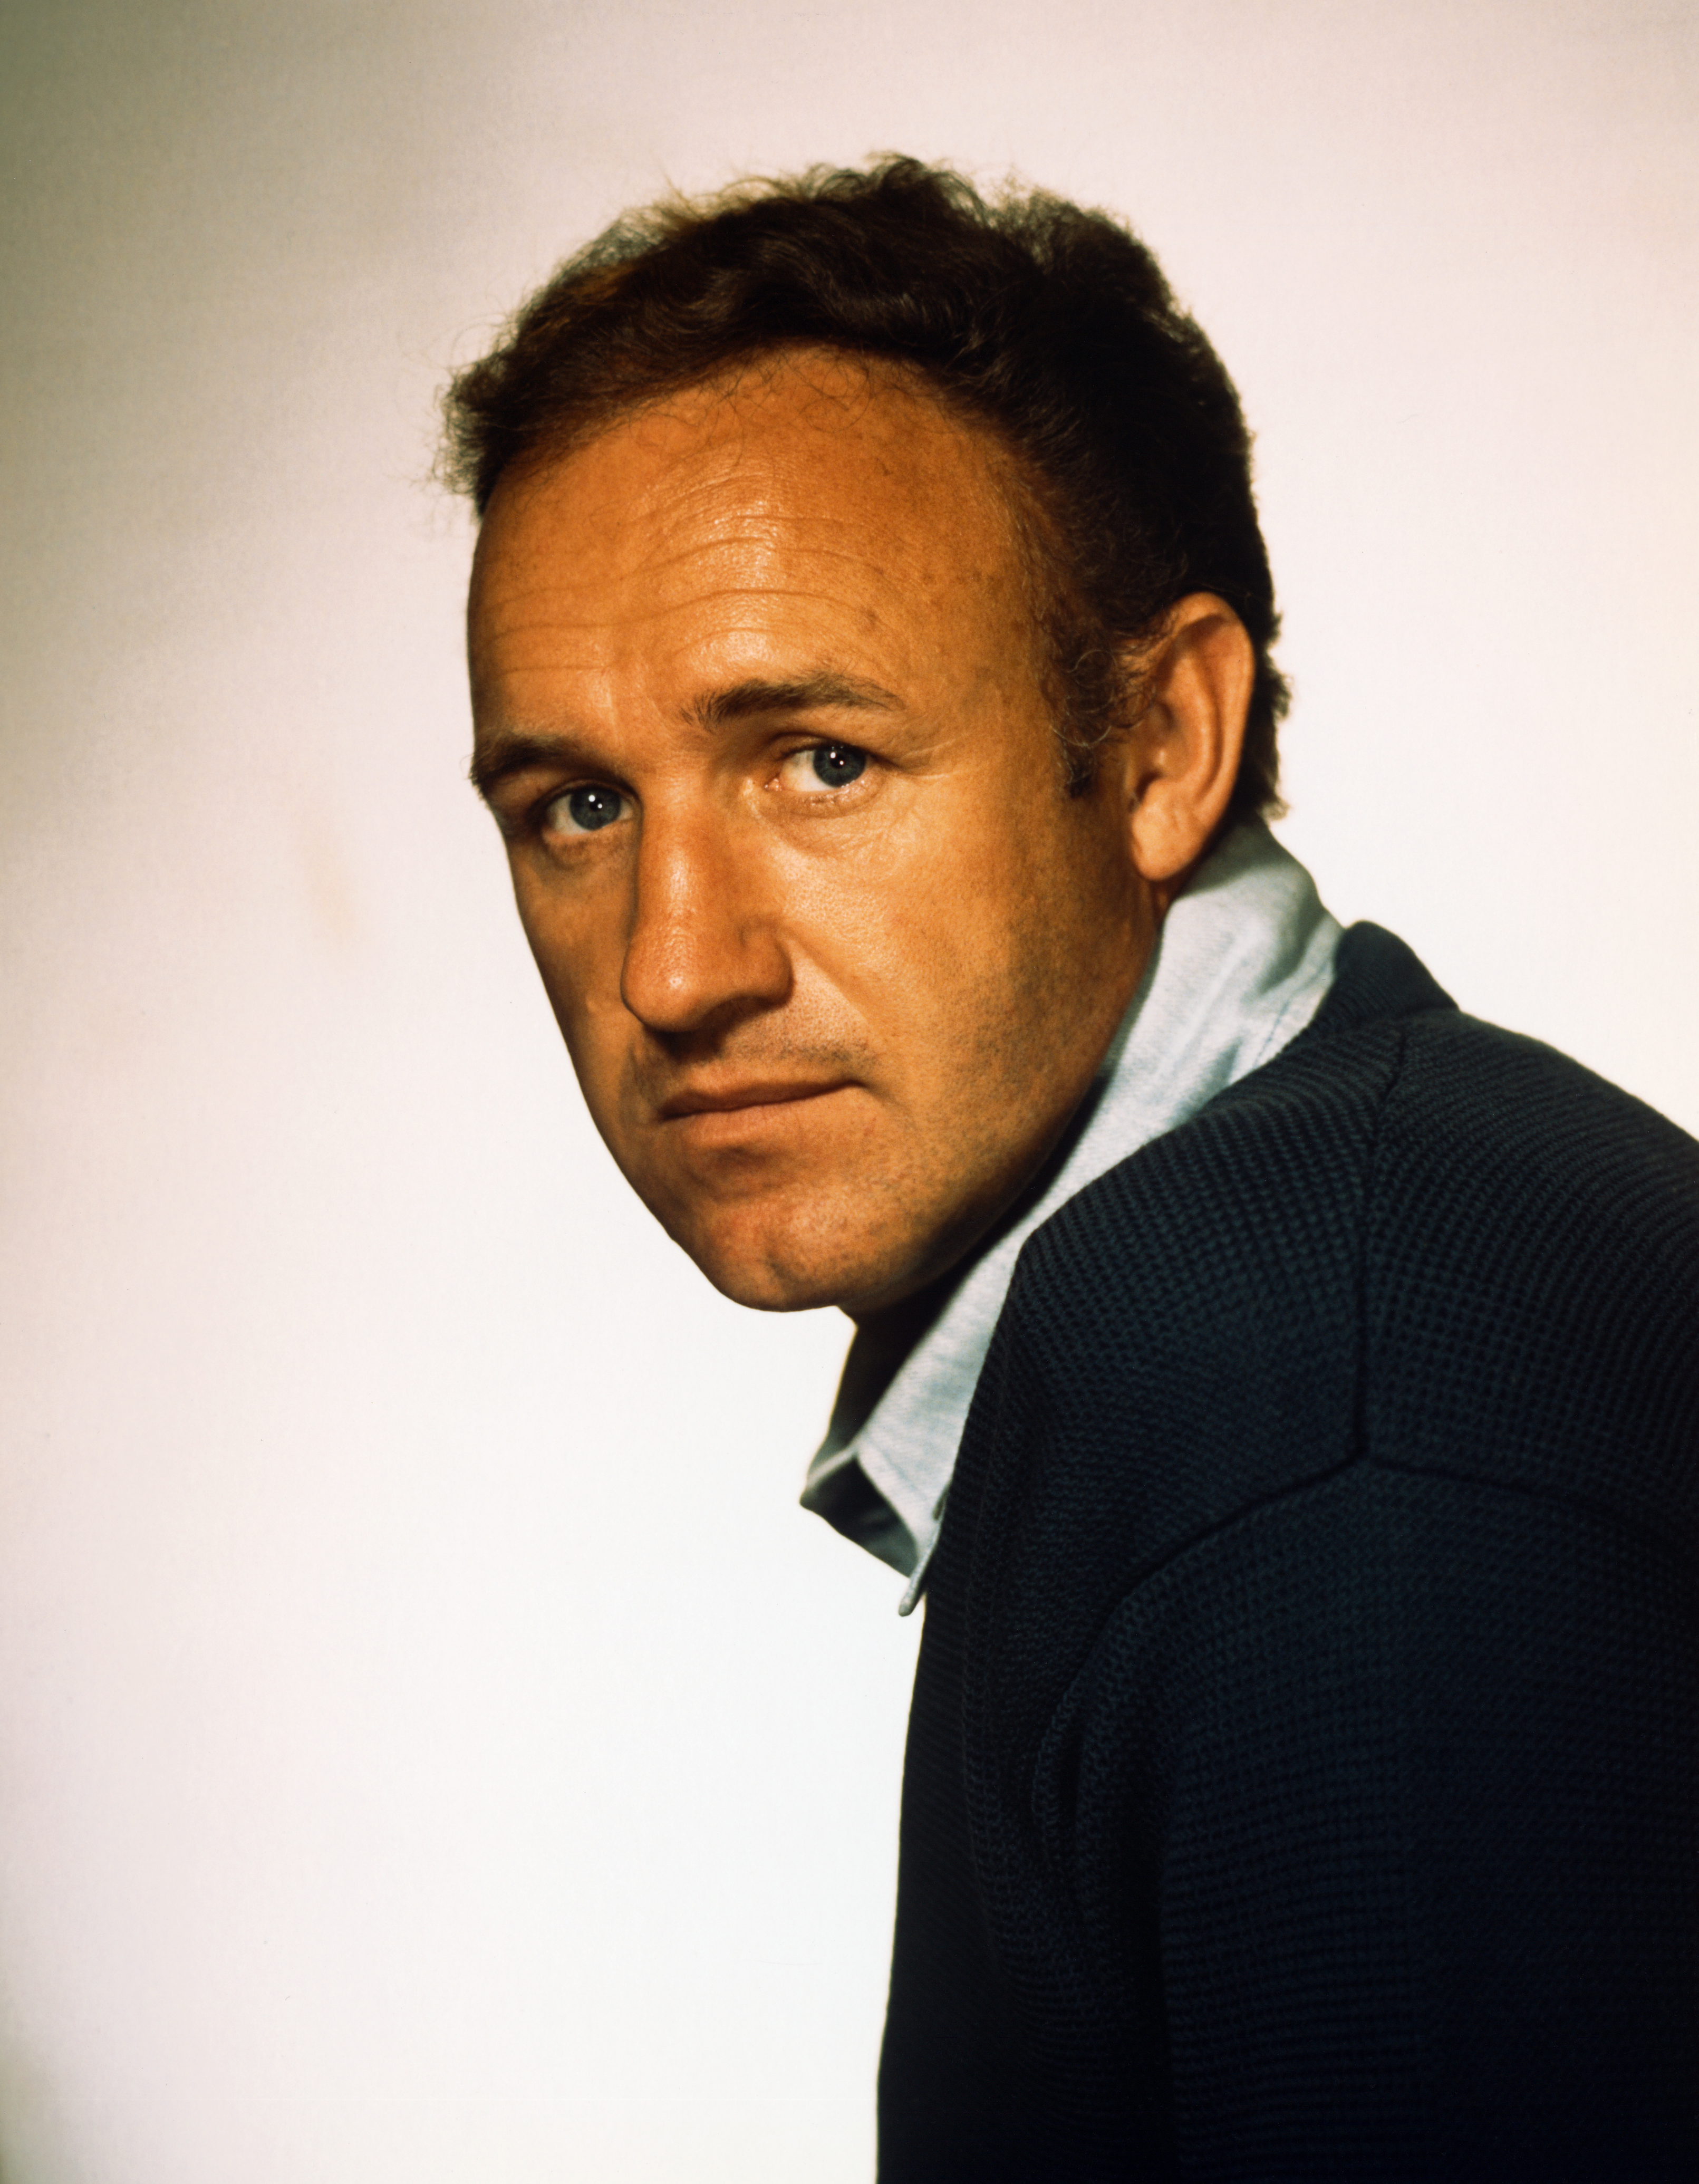 Publicity portrait of the famous actor, 1970 | Source: Getty Images